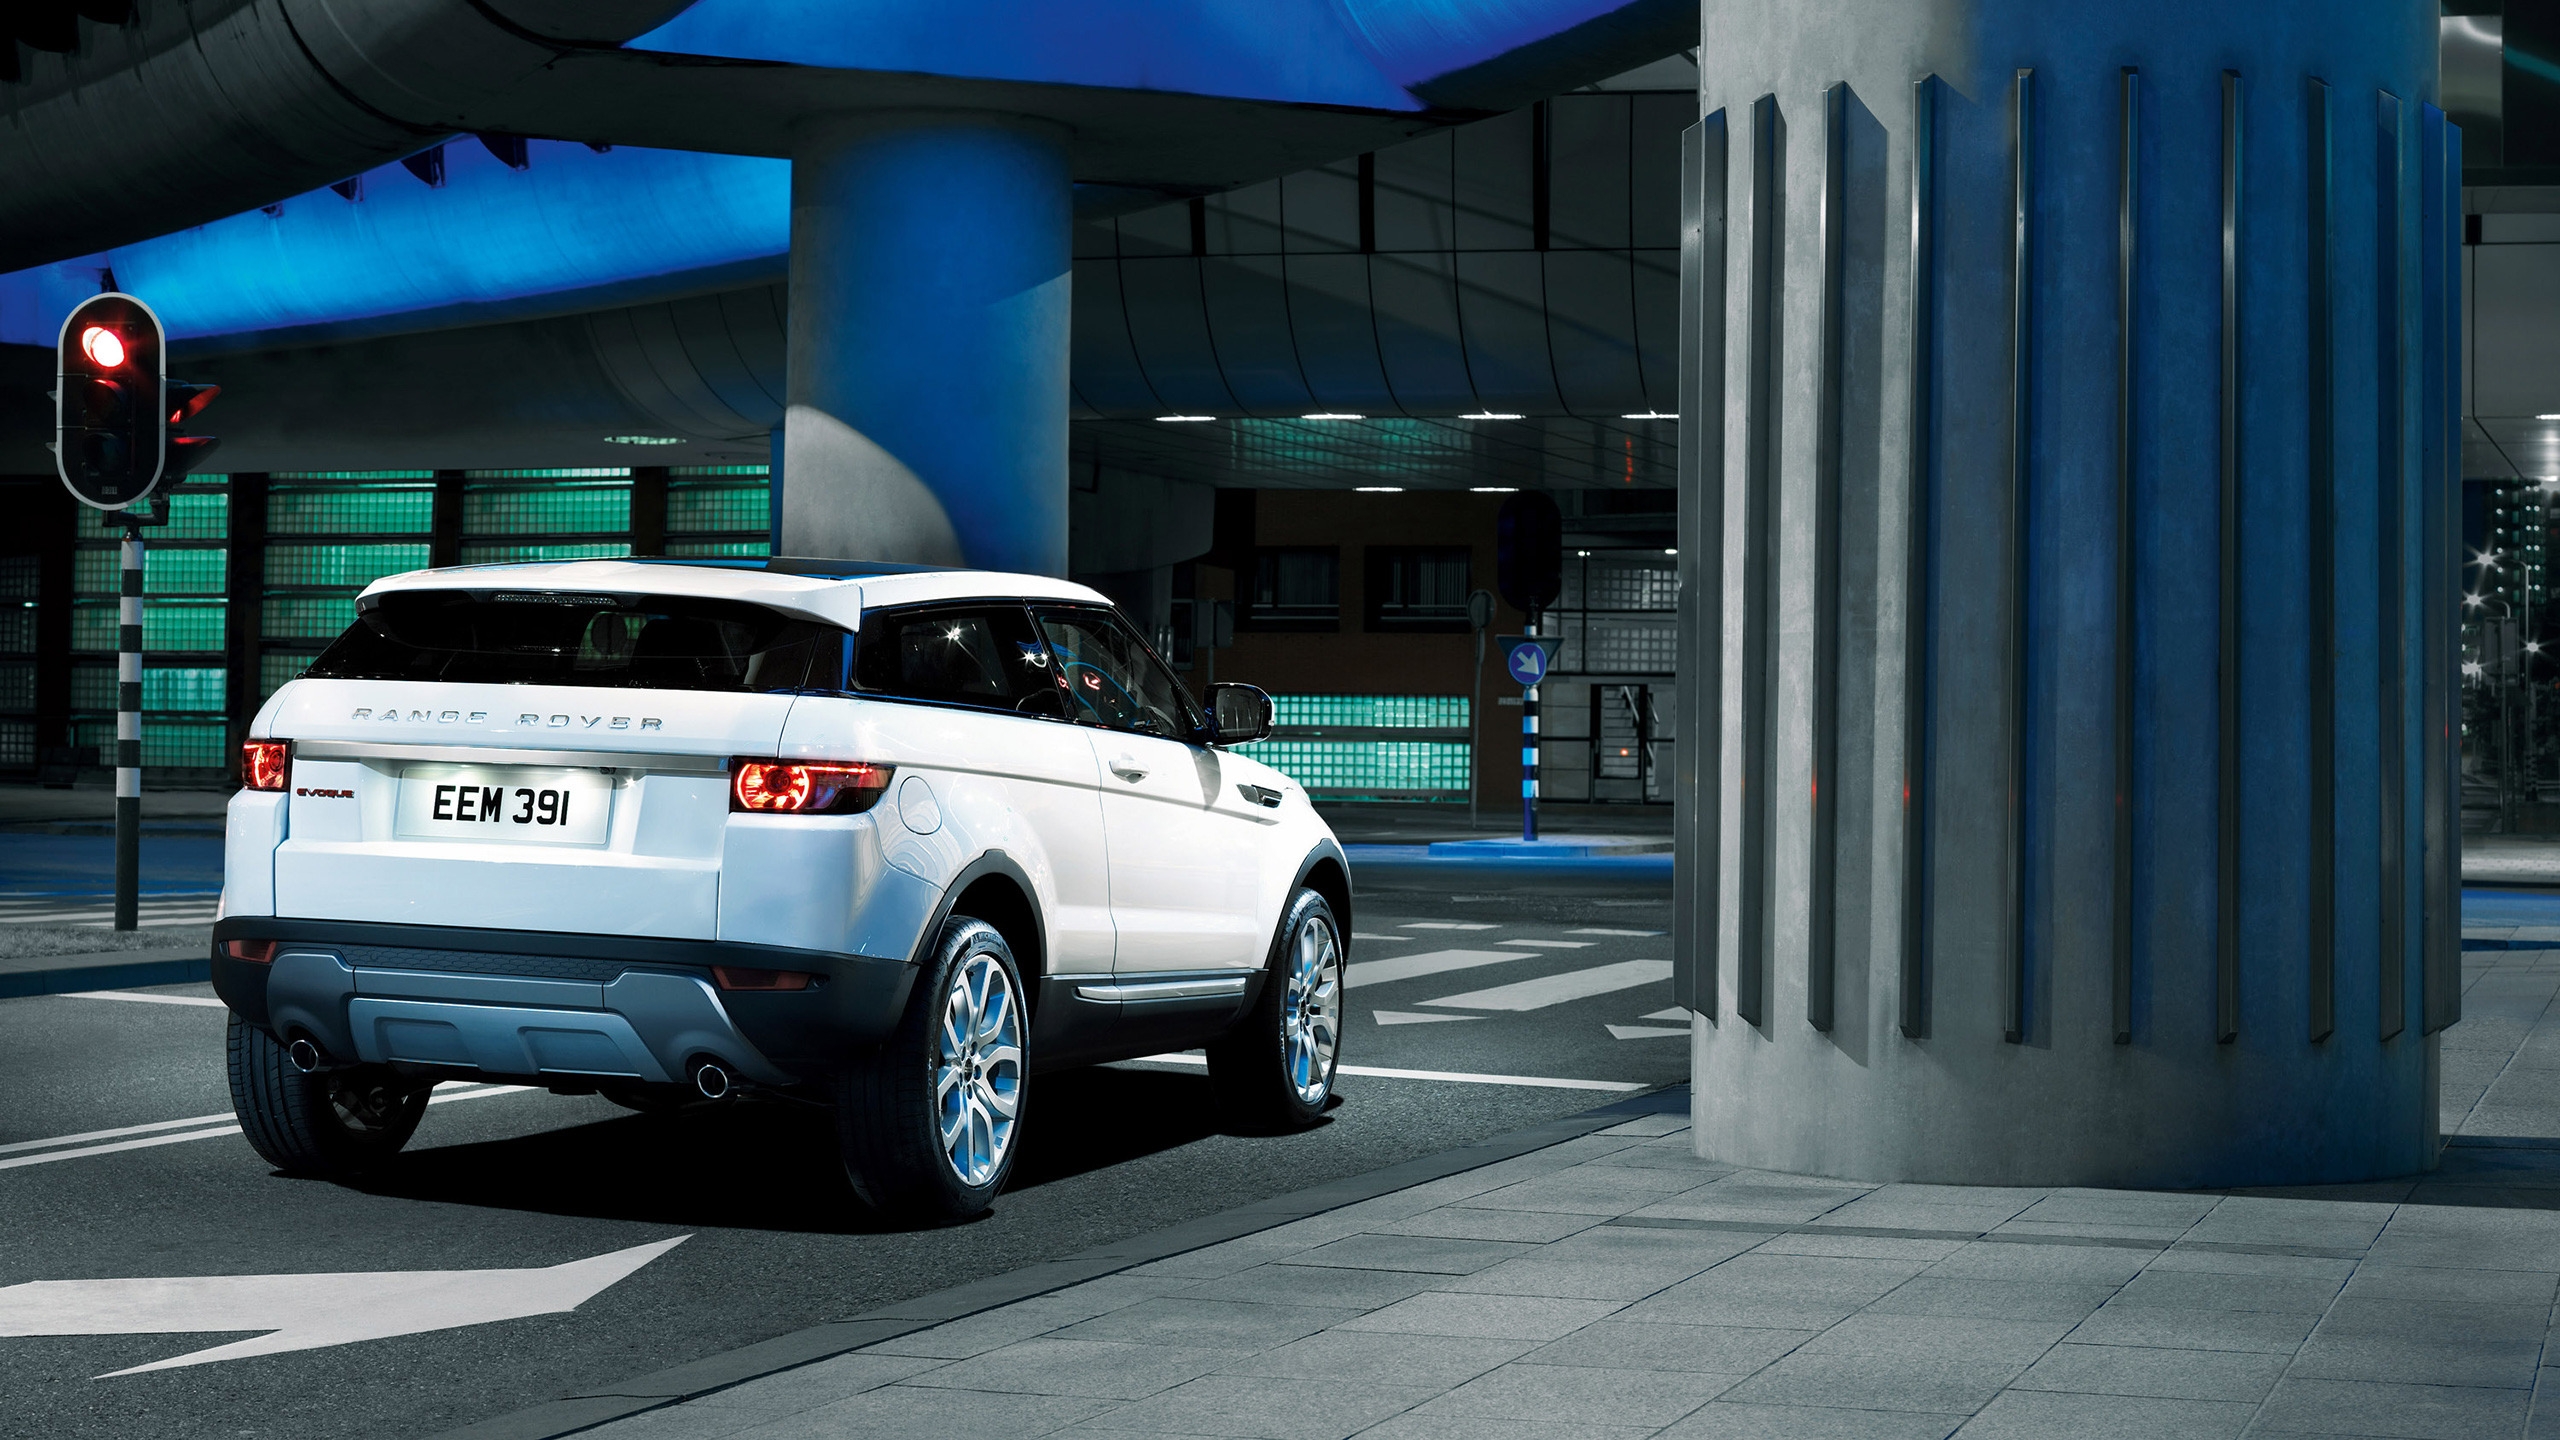 Range Rover Evoque Rear for 2560x1440 HDTV resolution